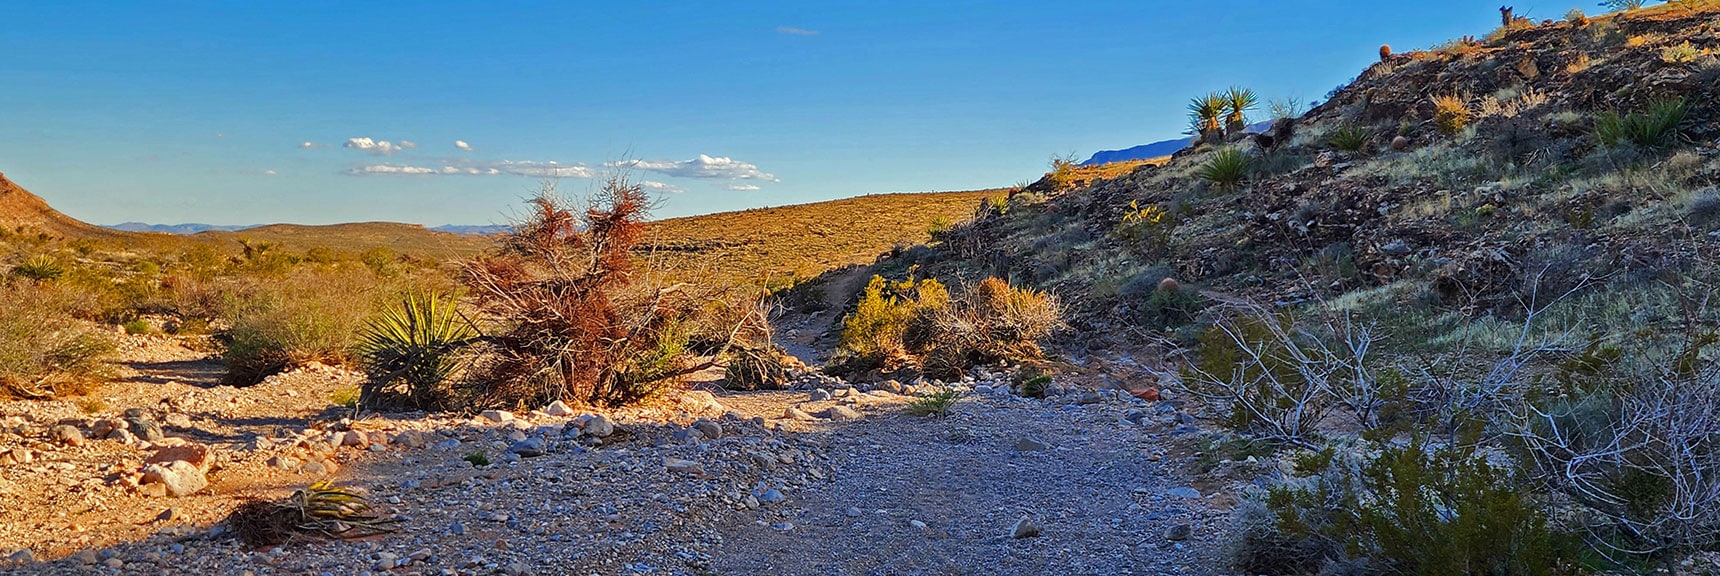 Half Wilson Trail Connection at East Base of Peak 3844 Hill. | Gray Cap Ridge / Brownstone Basin Loop | La Madre Mountains Wilderness, Nevada